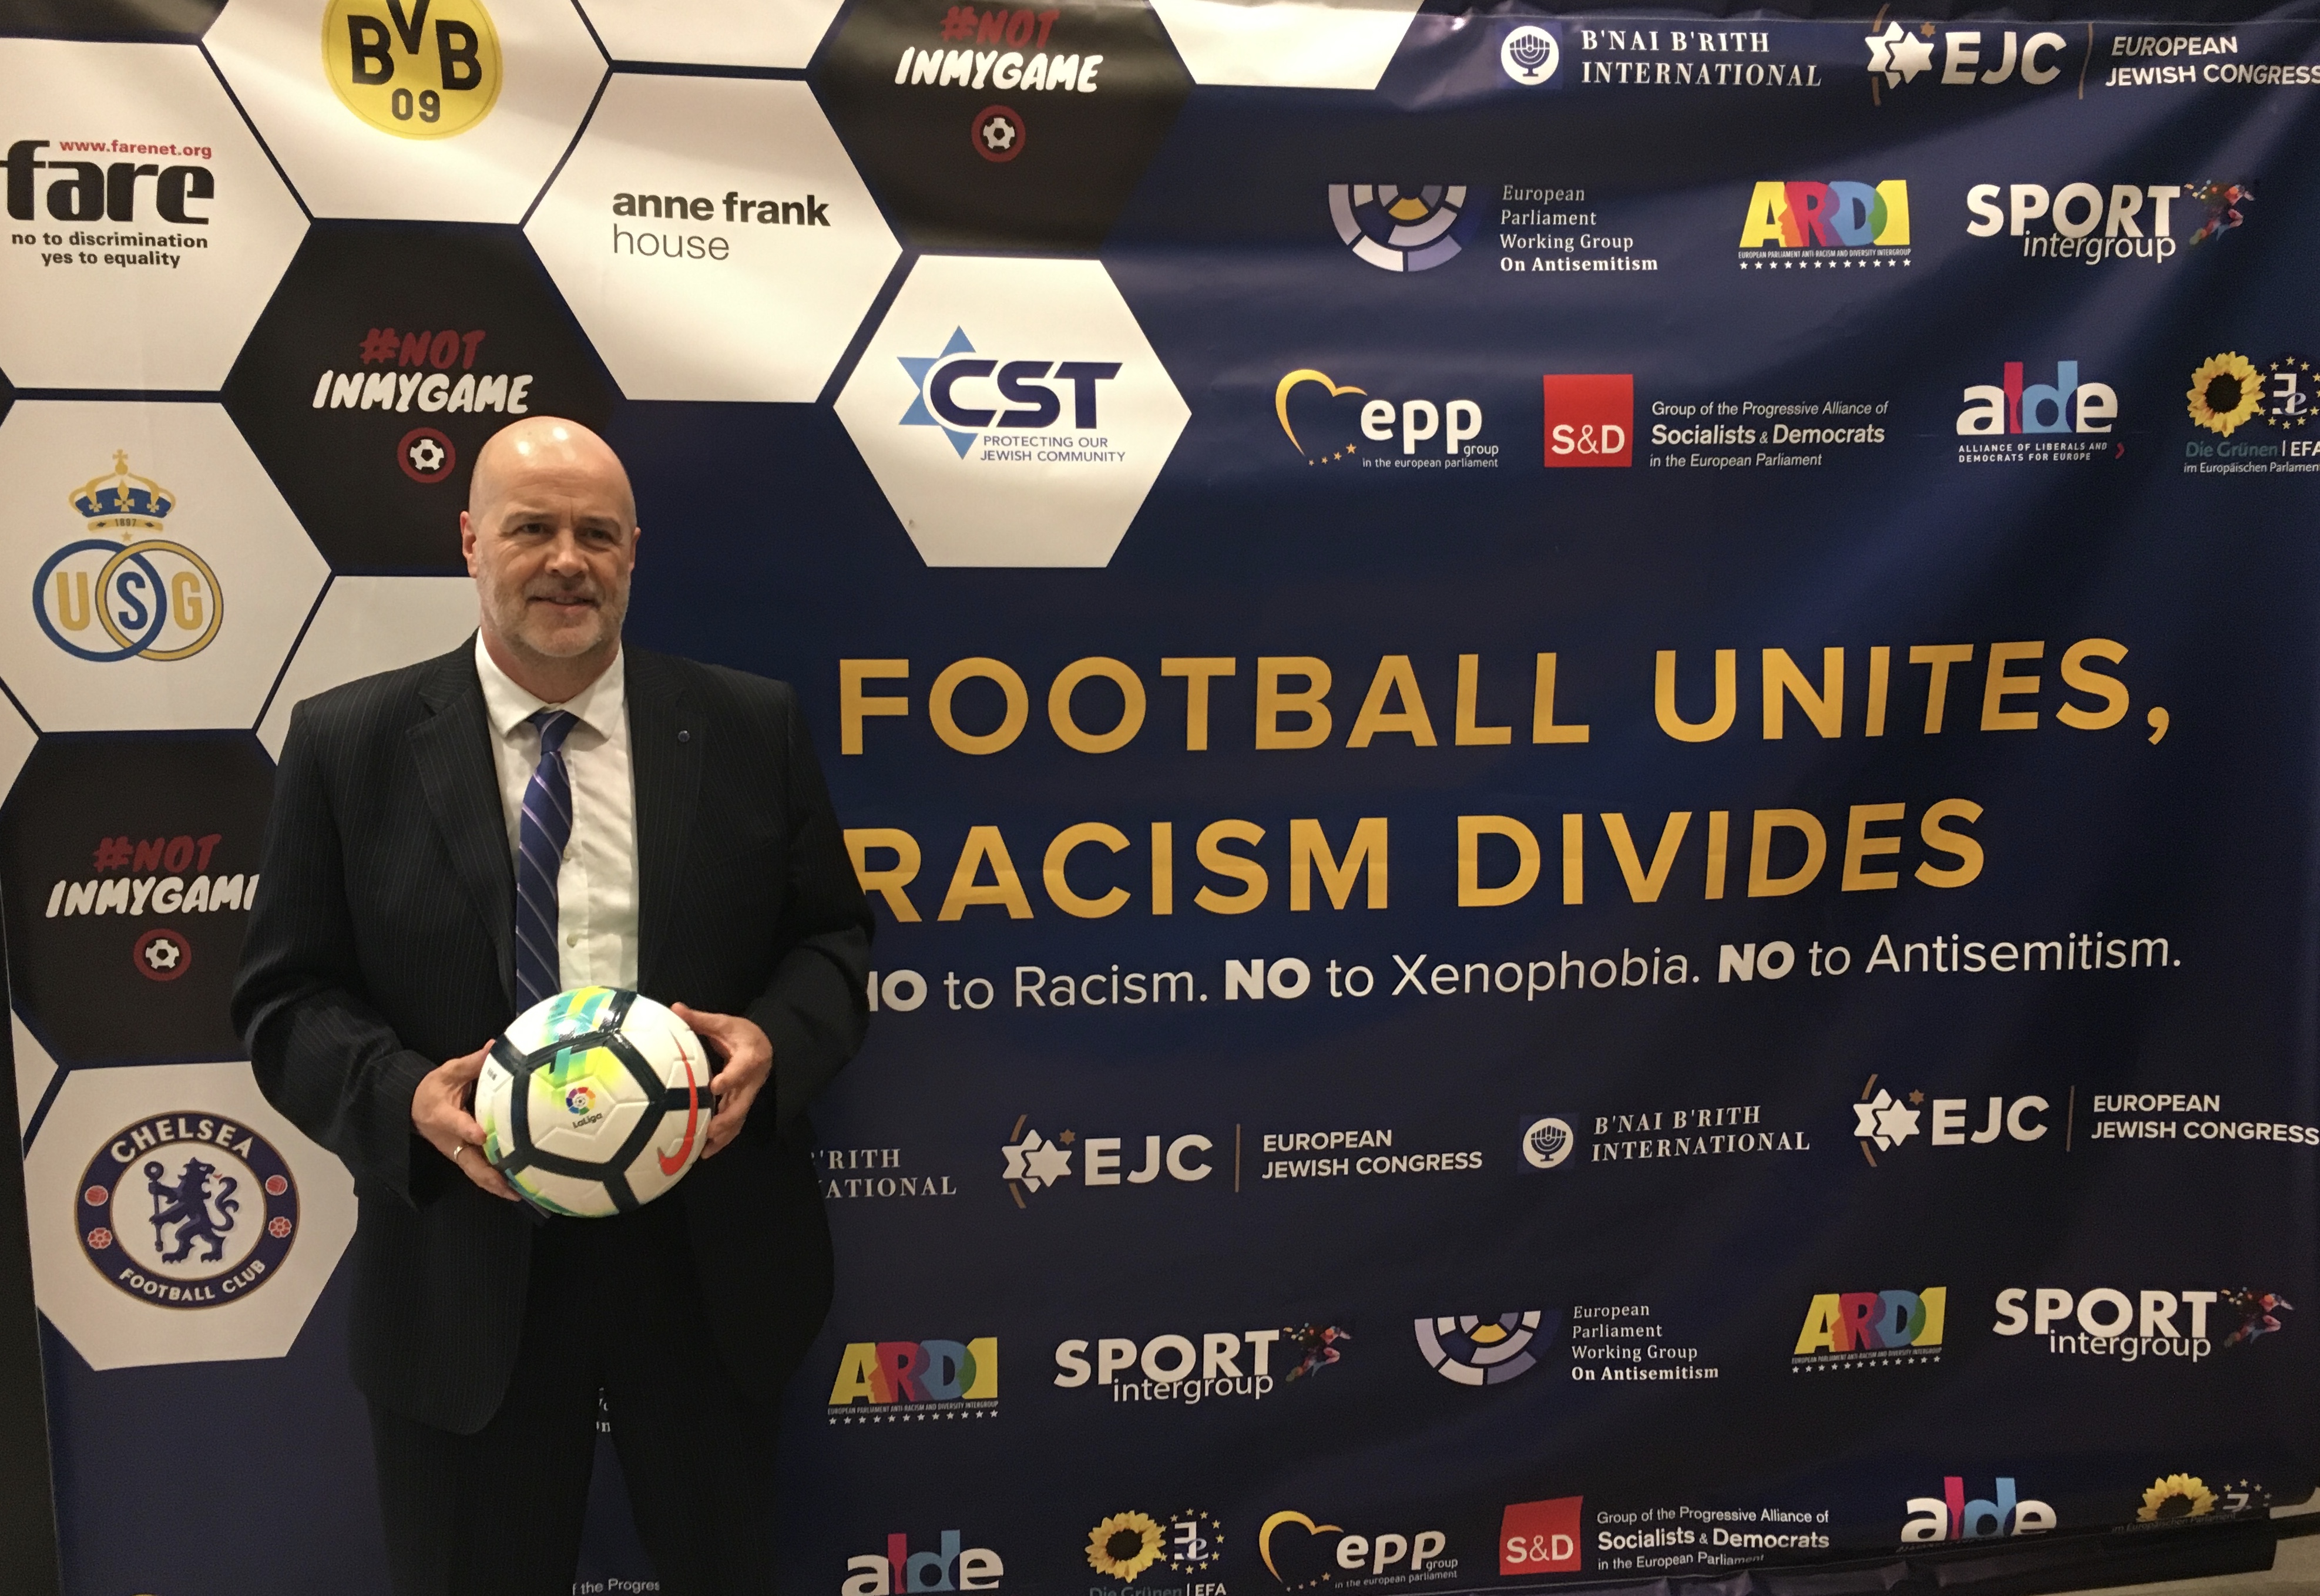 Football Unites, Racism Divides #notinmygame